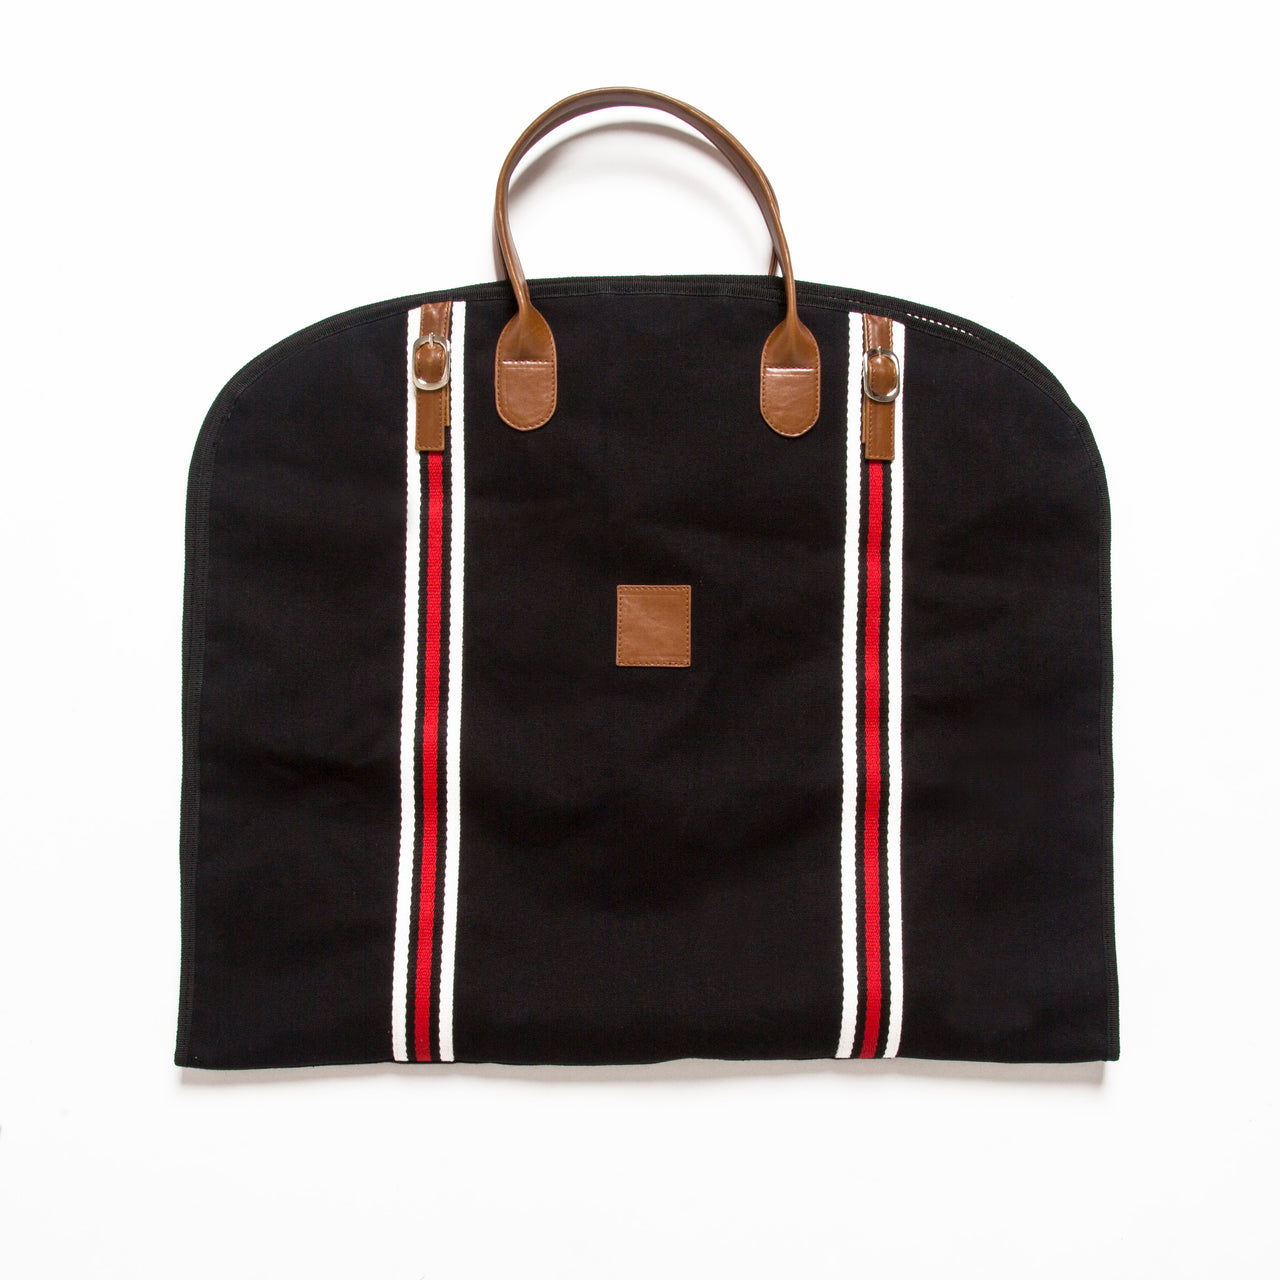 The Premium Original Garment Bag